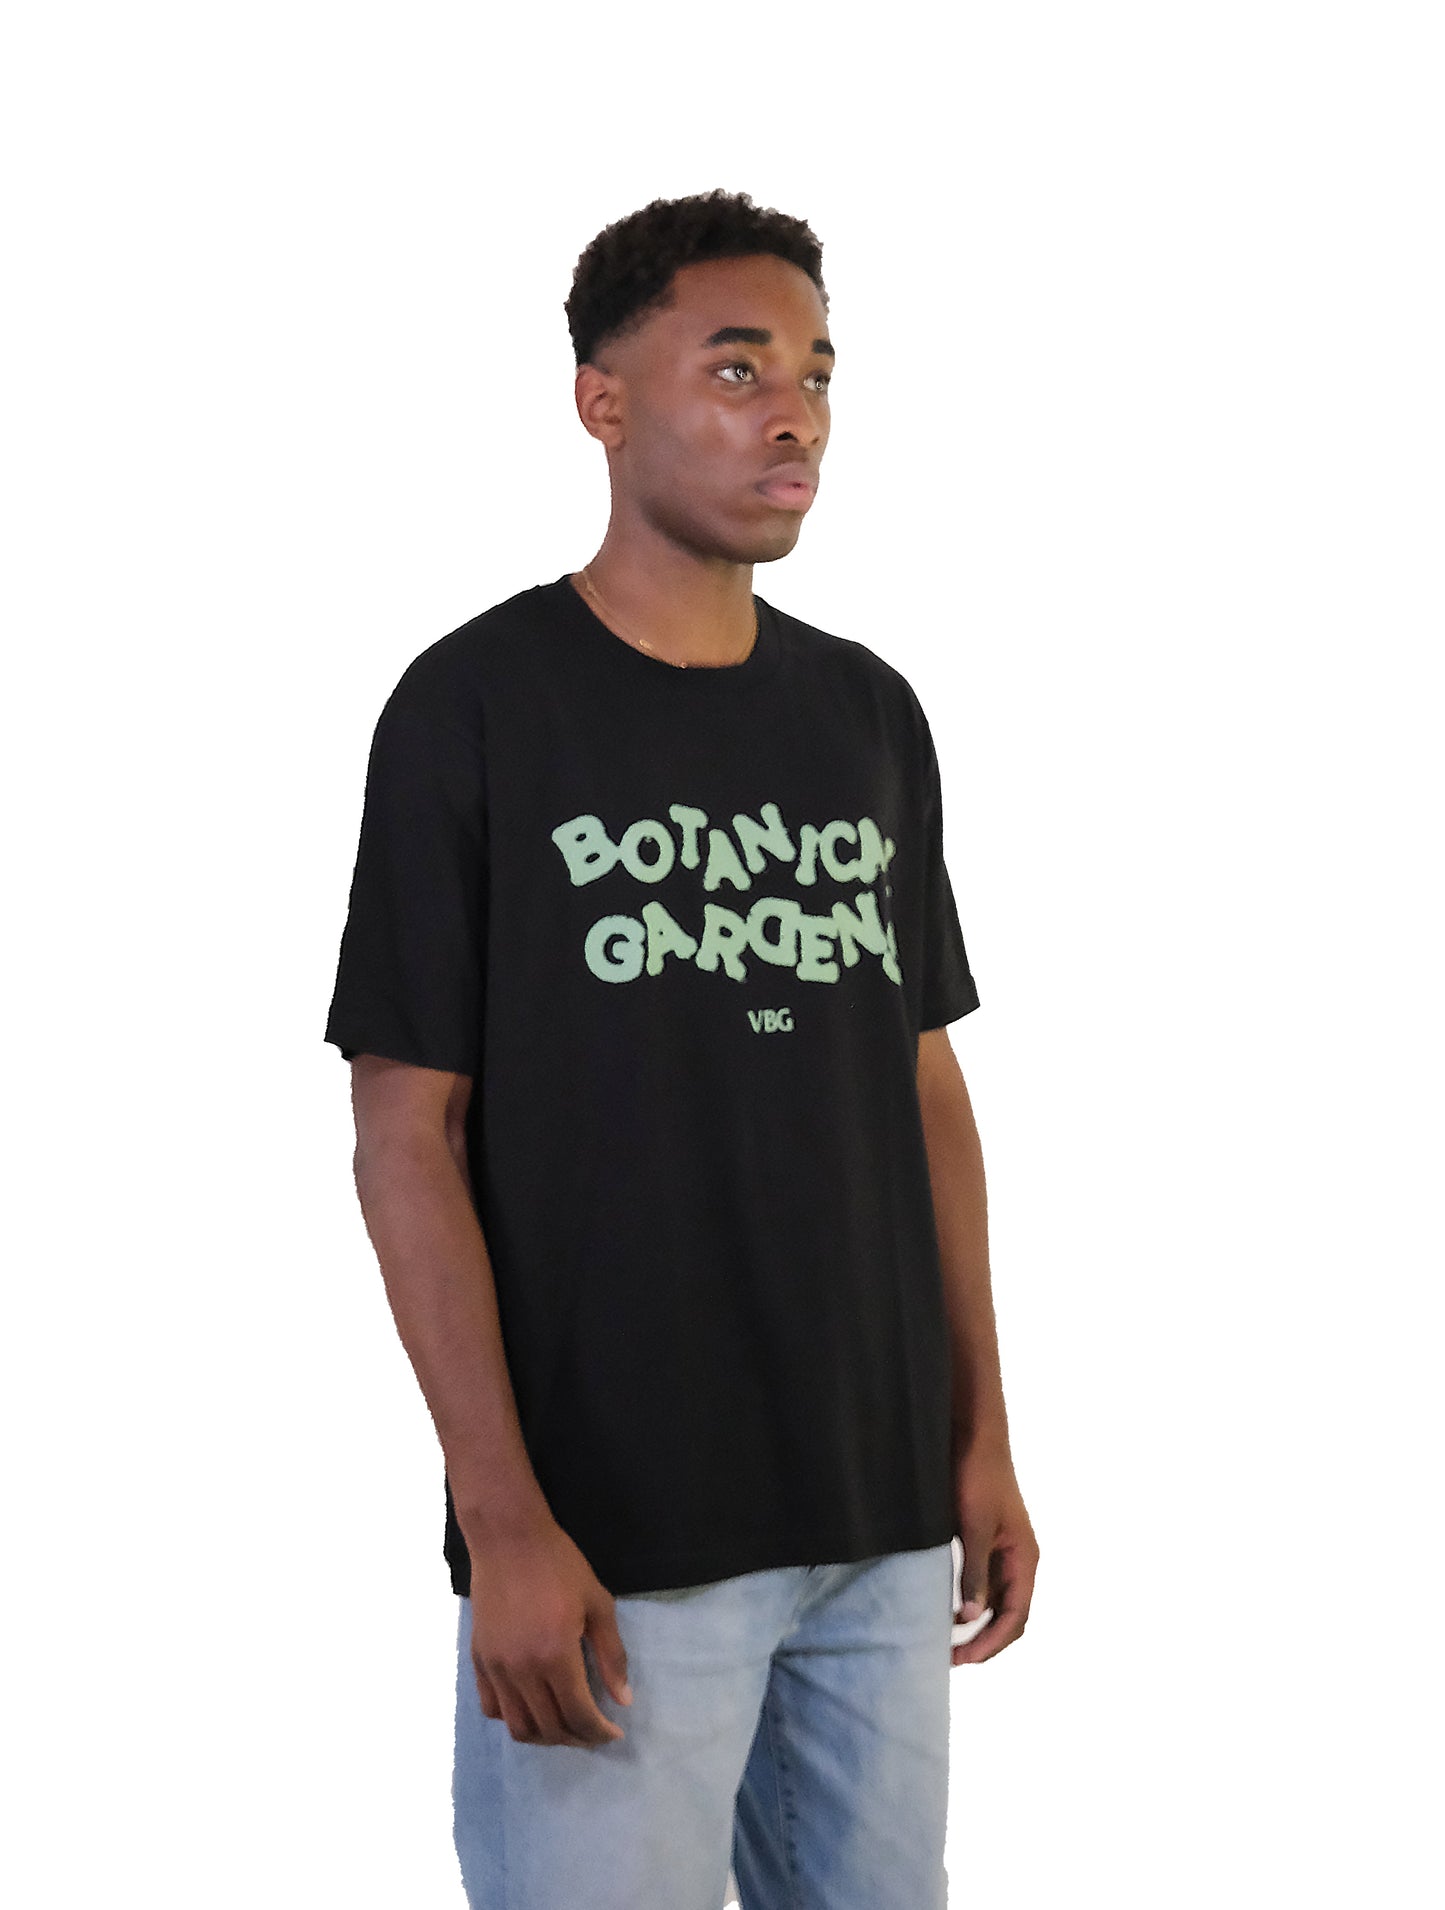 "Botanical Gardens" T-Shirt - Black/Green - VBG